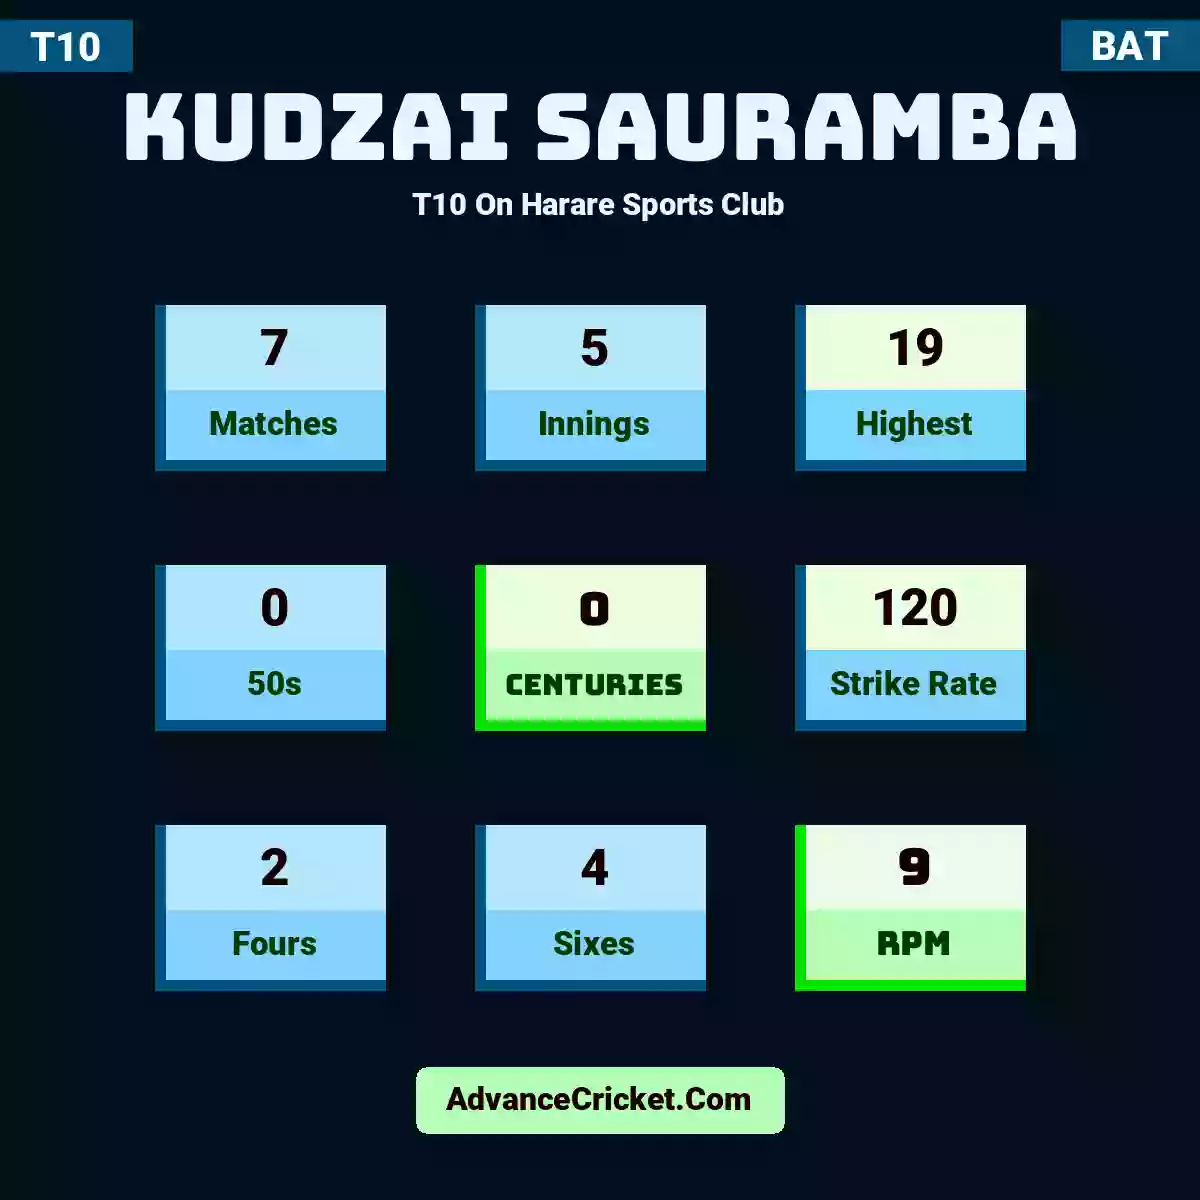 Kudzai Sauramba T10  On Harare Sports Club, Kudzai Sauramba played 7 matches, scored 19 runs as highest, 0 half-centuries, and 0 centuries, with a strike rate of 120. K.Sauramba hit 2 fours and 4 sixes, with an RPM of 9.